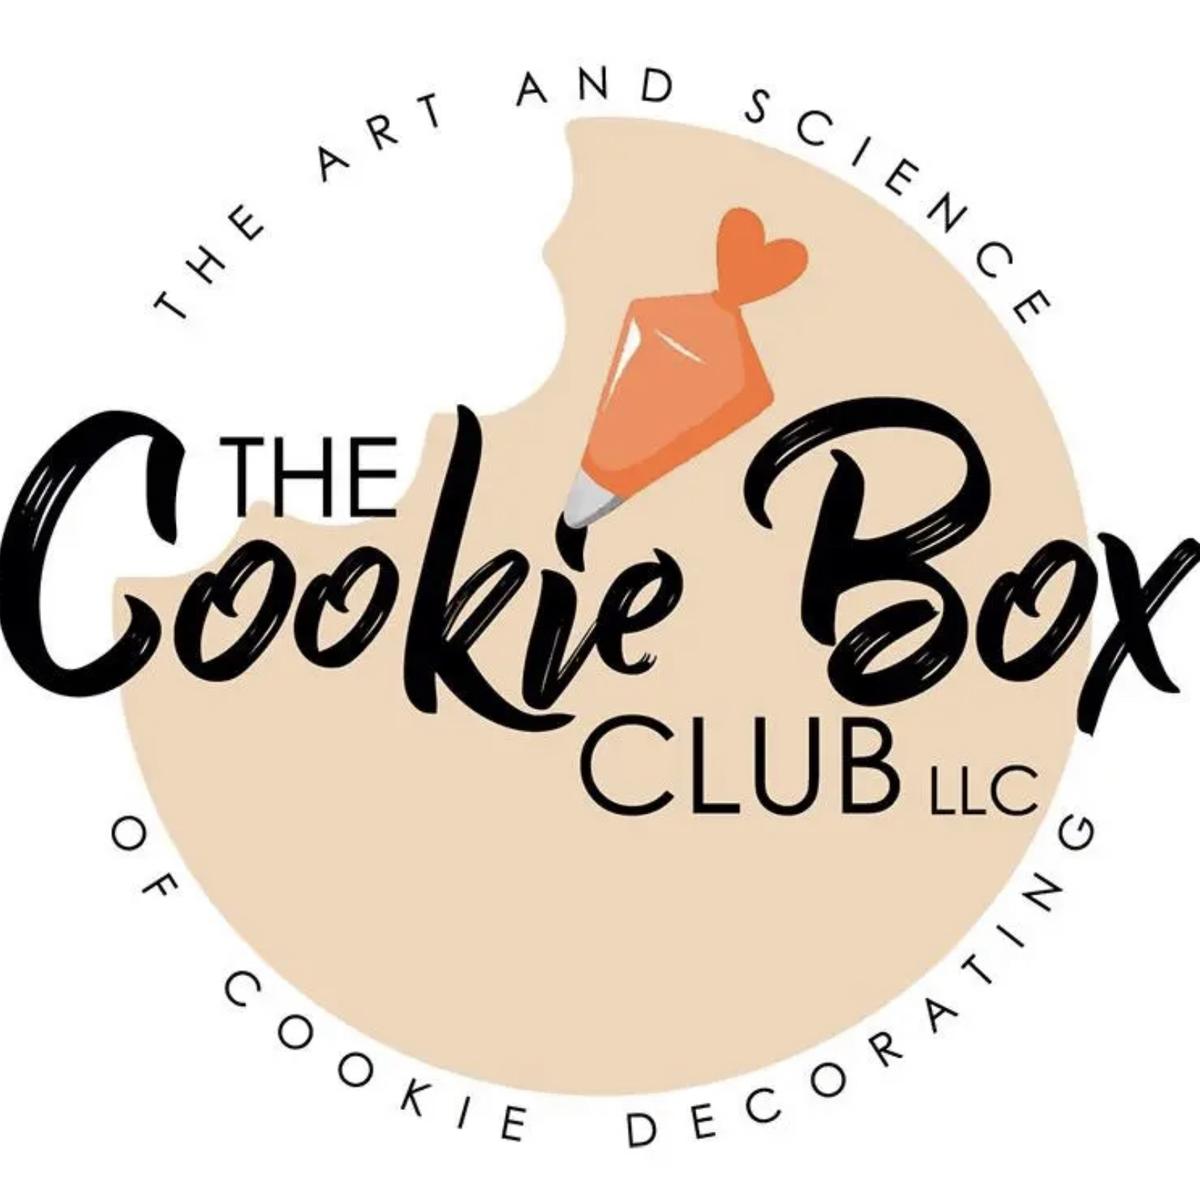 cookieboxclub's images